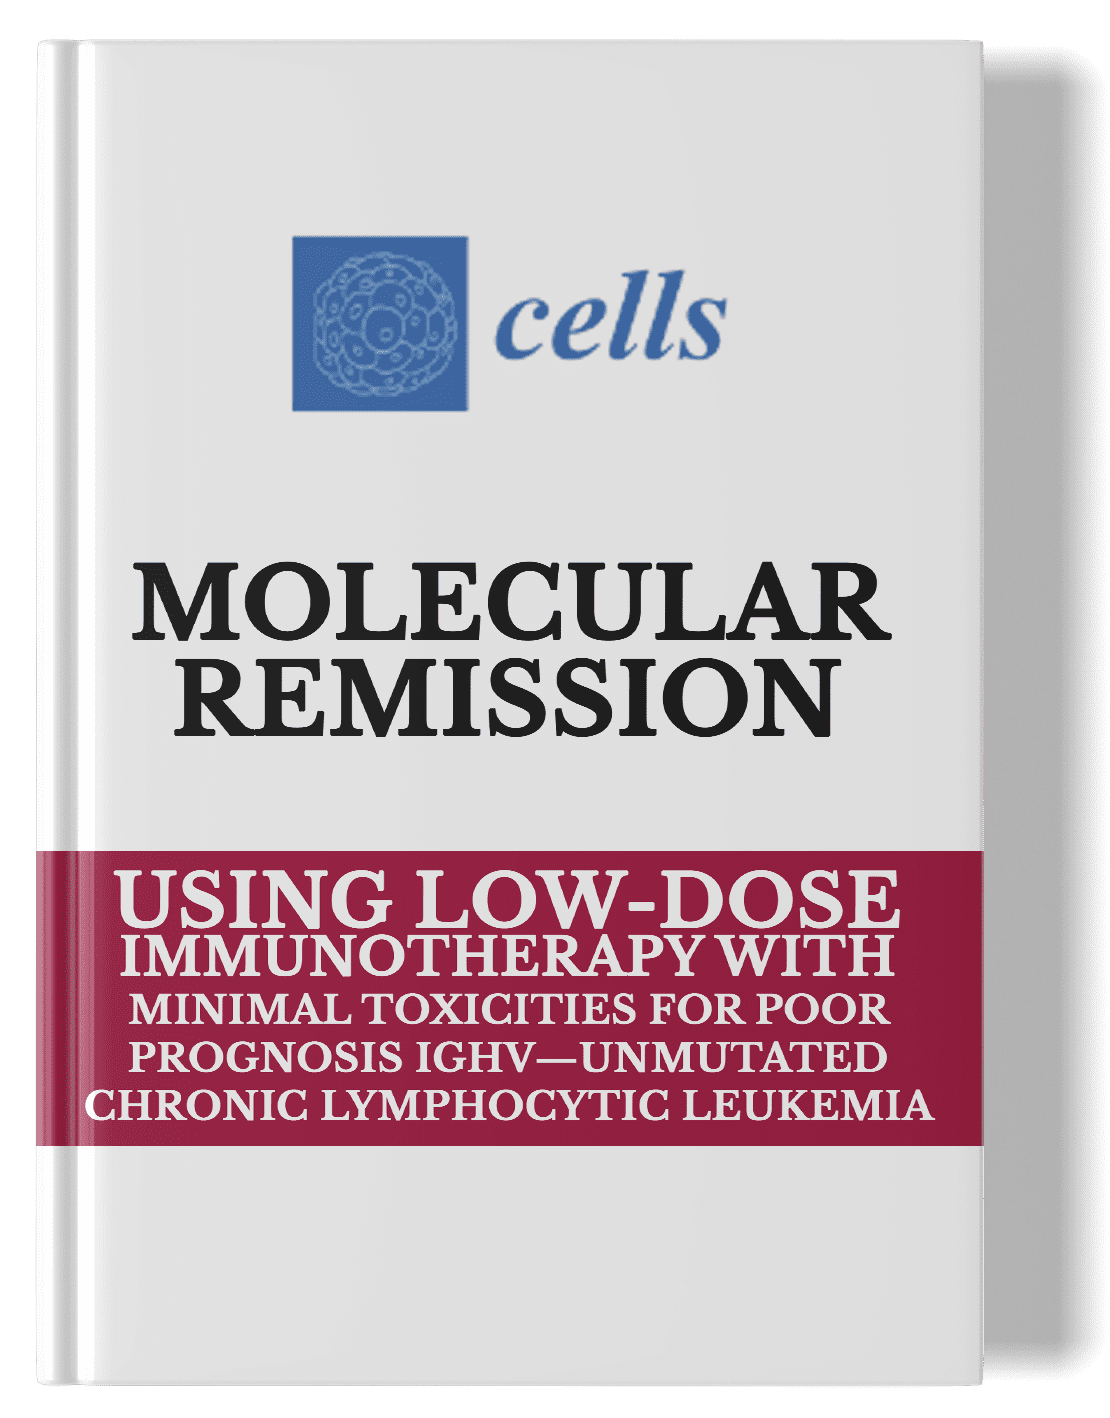 Compassionate regenerative medicine services, book cover molecular remission